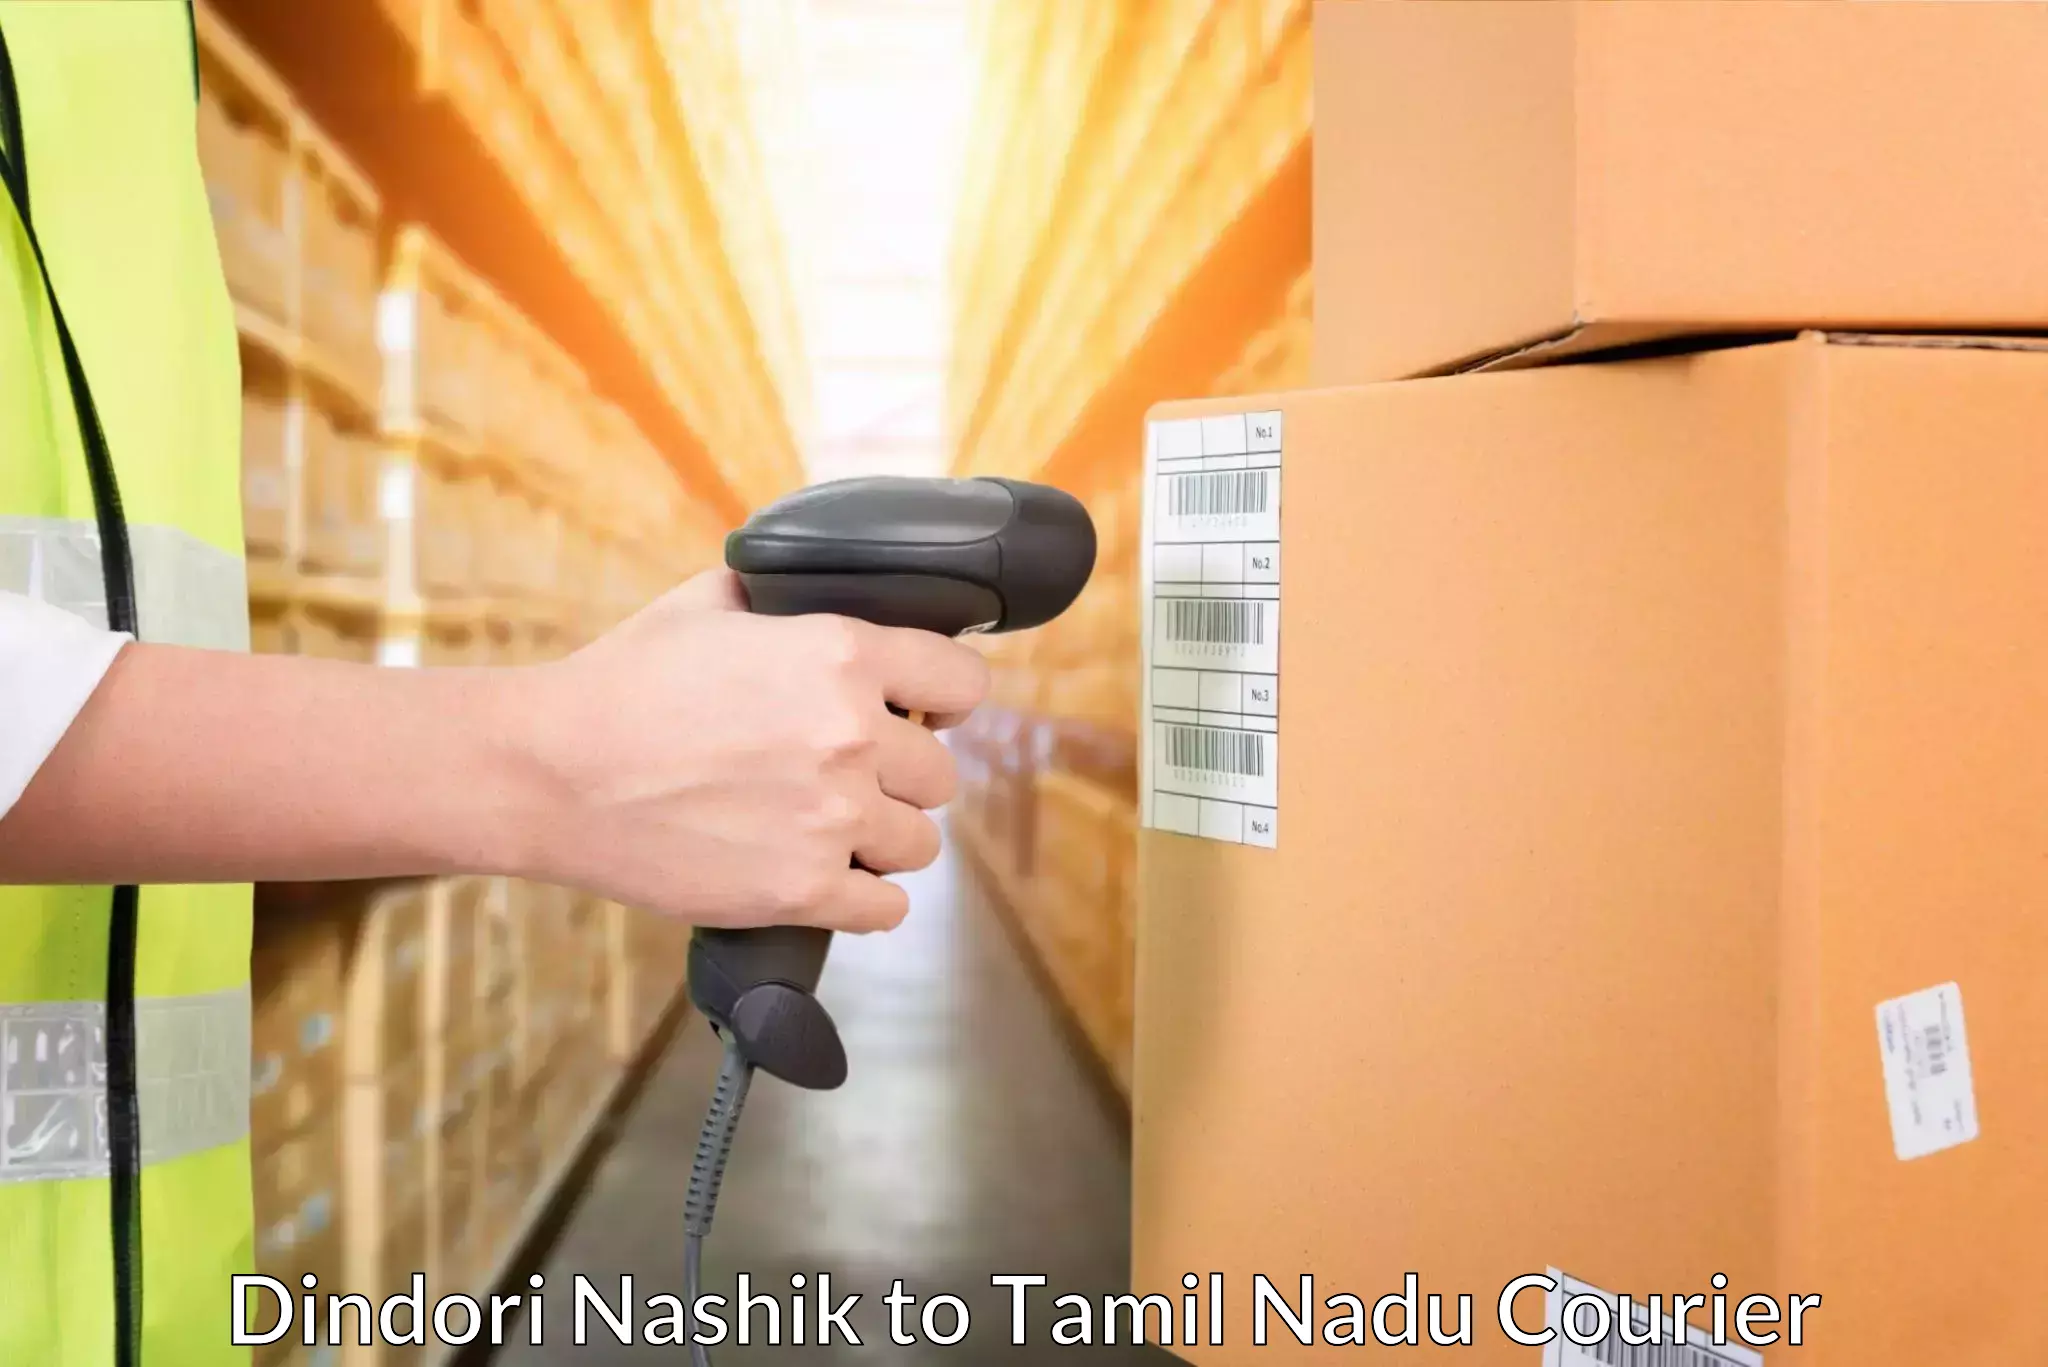 Overnight delivery Dindori Nashik to Coimbatore